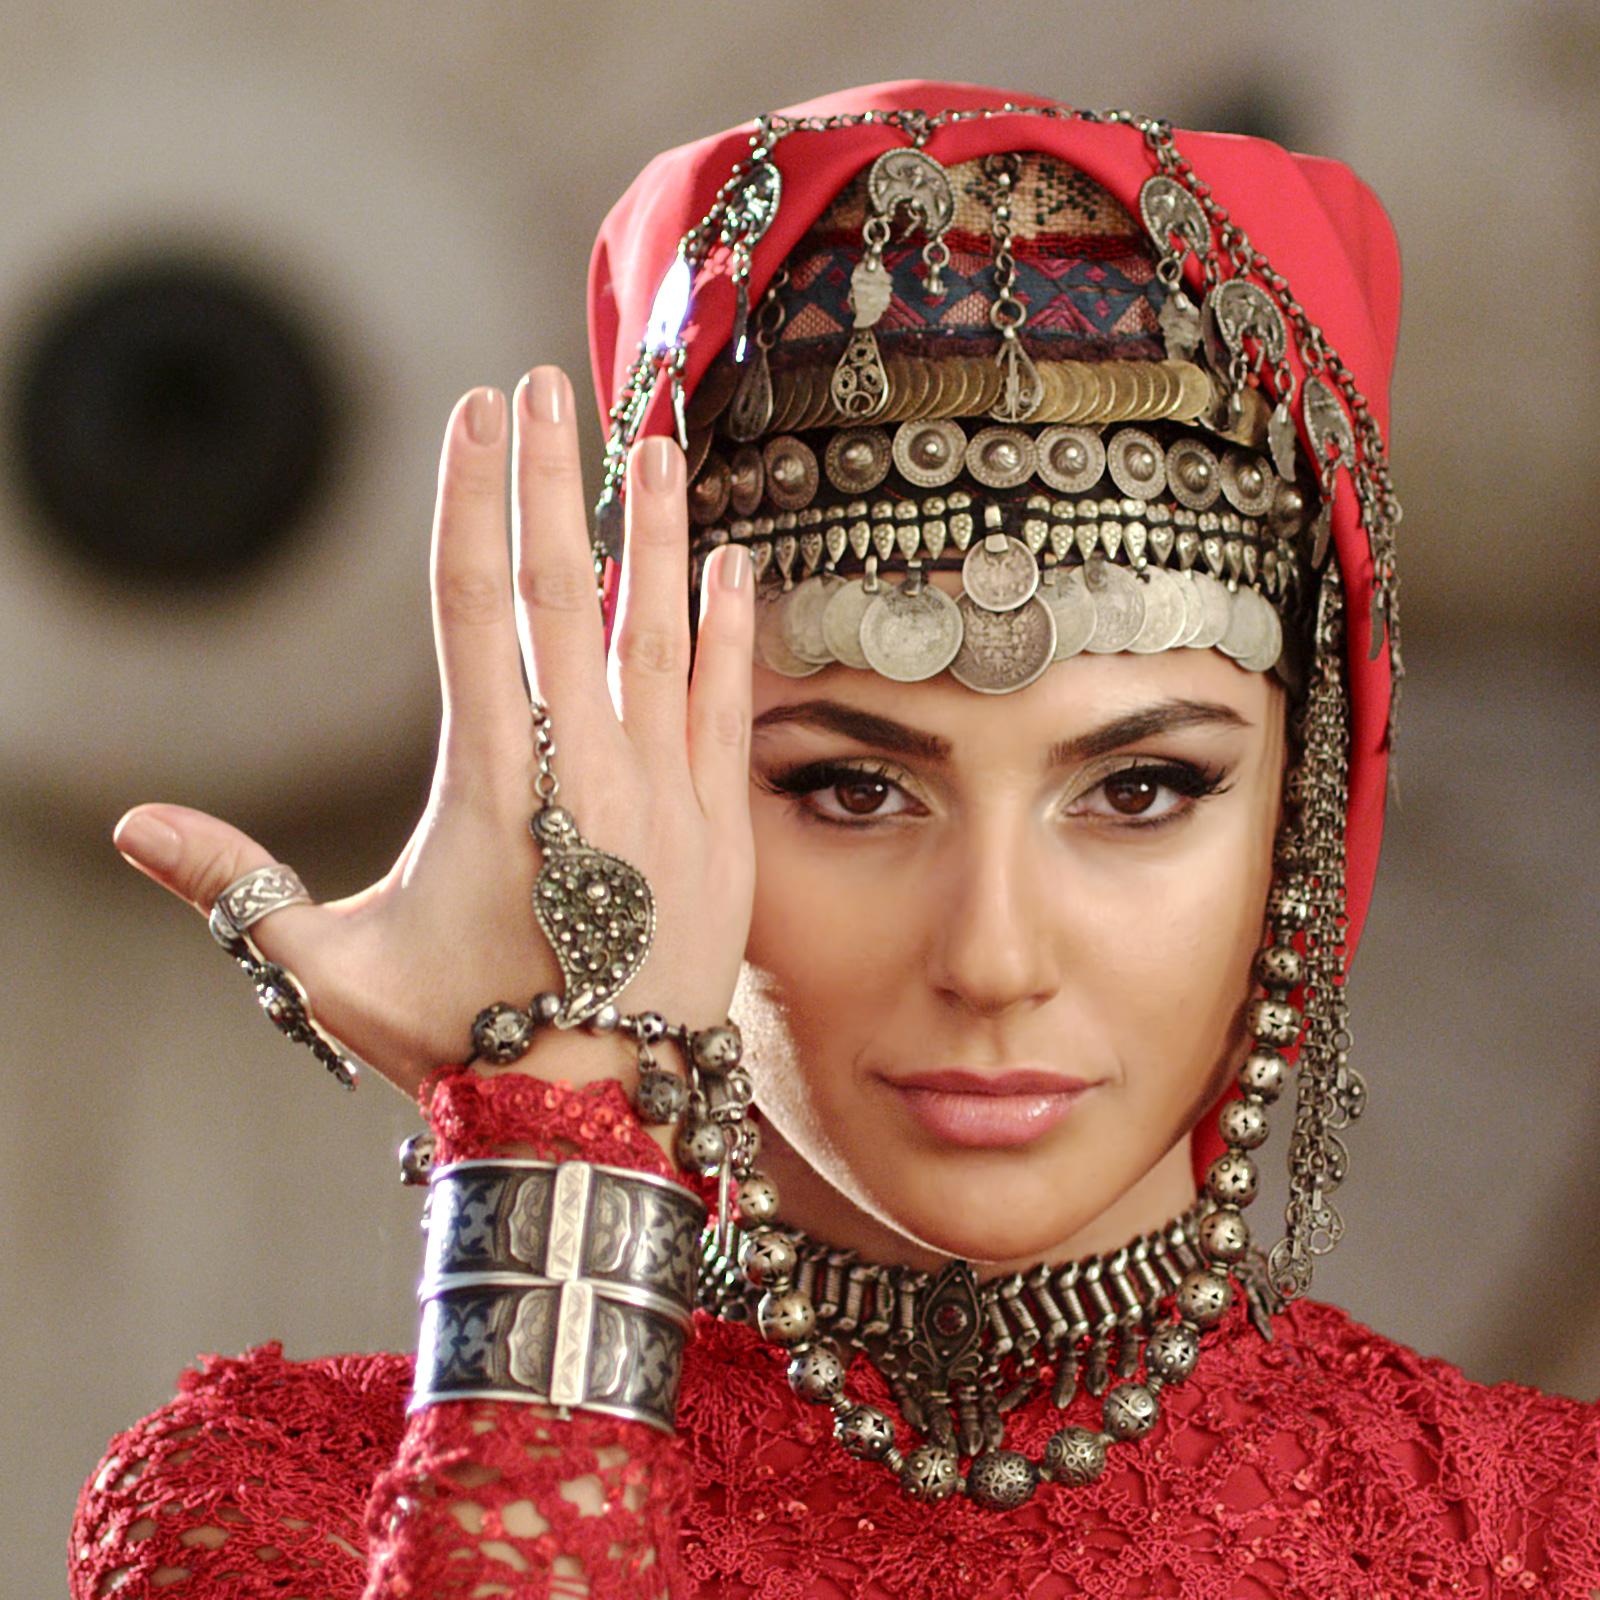 Armenian traditional dress